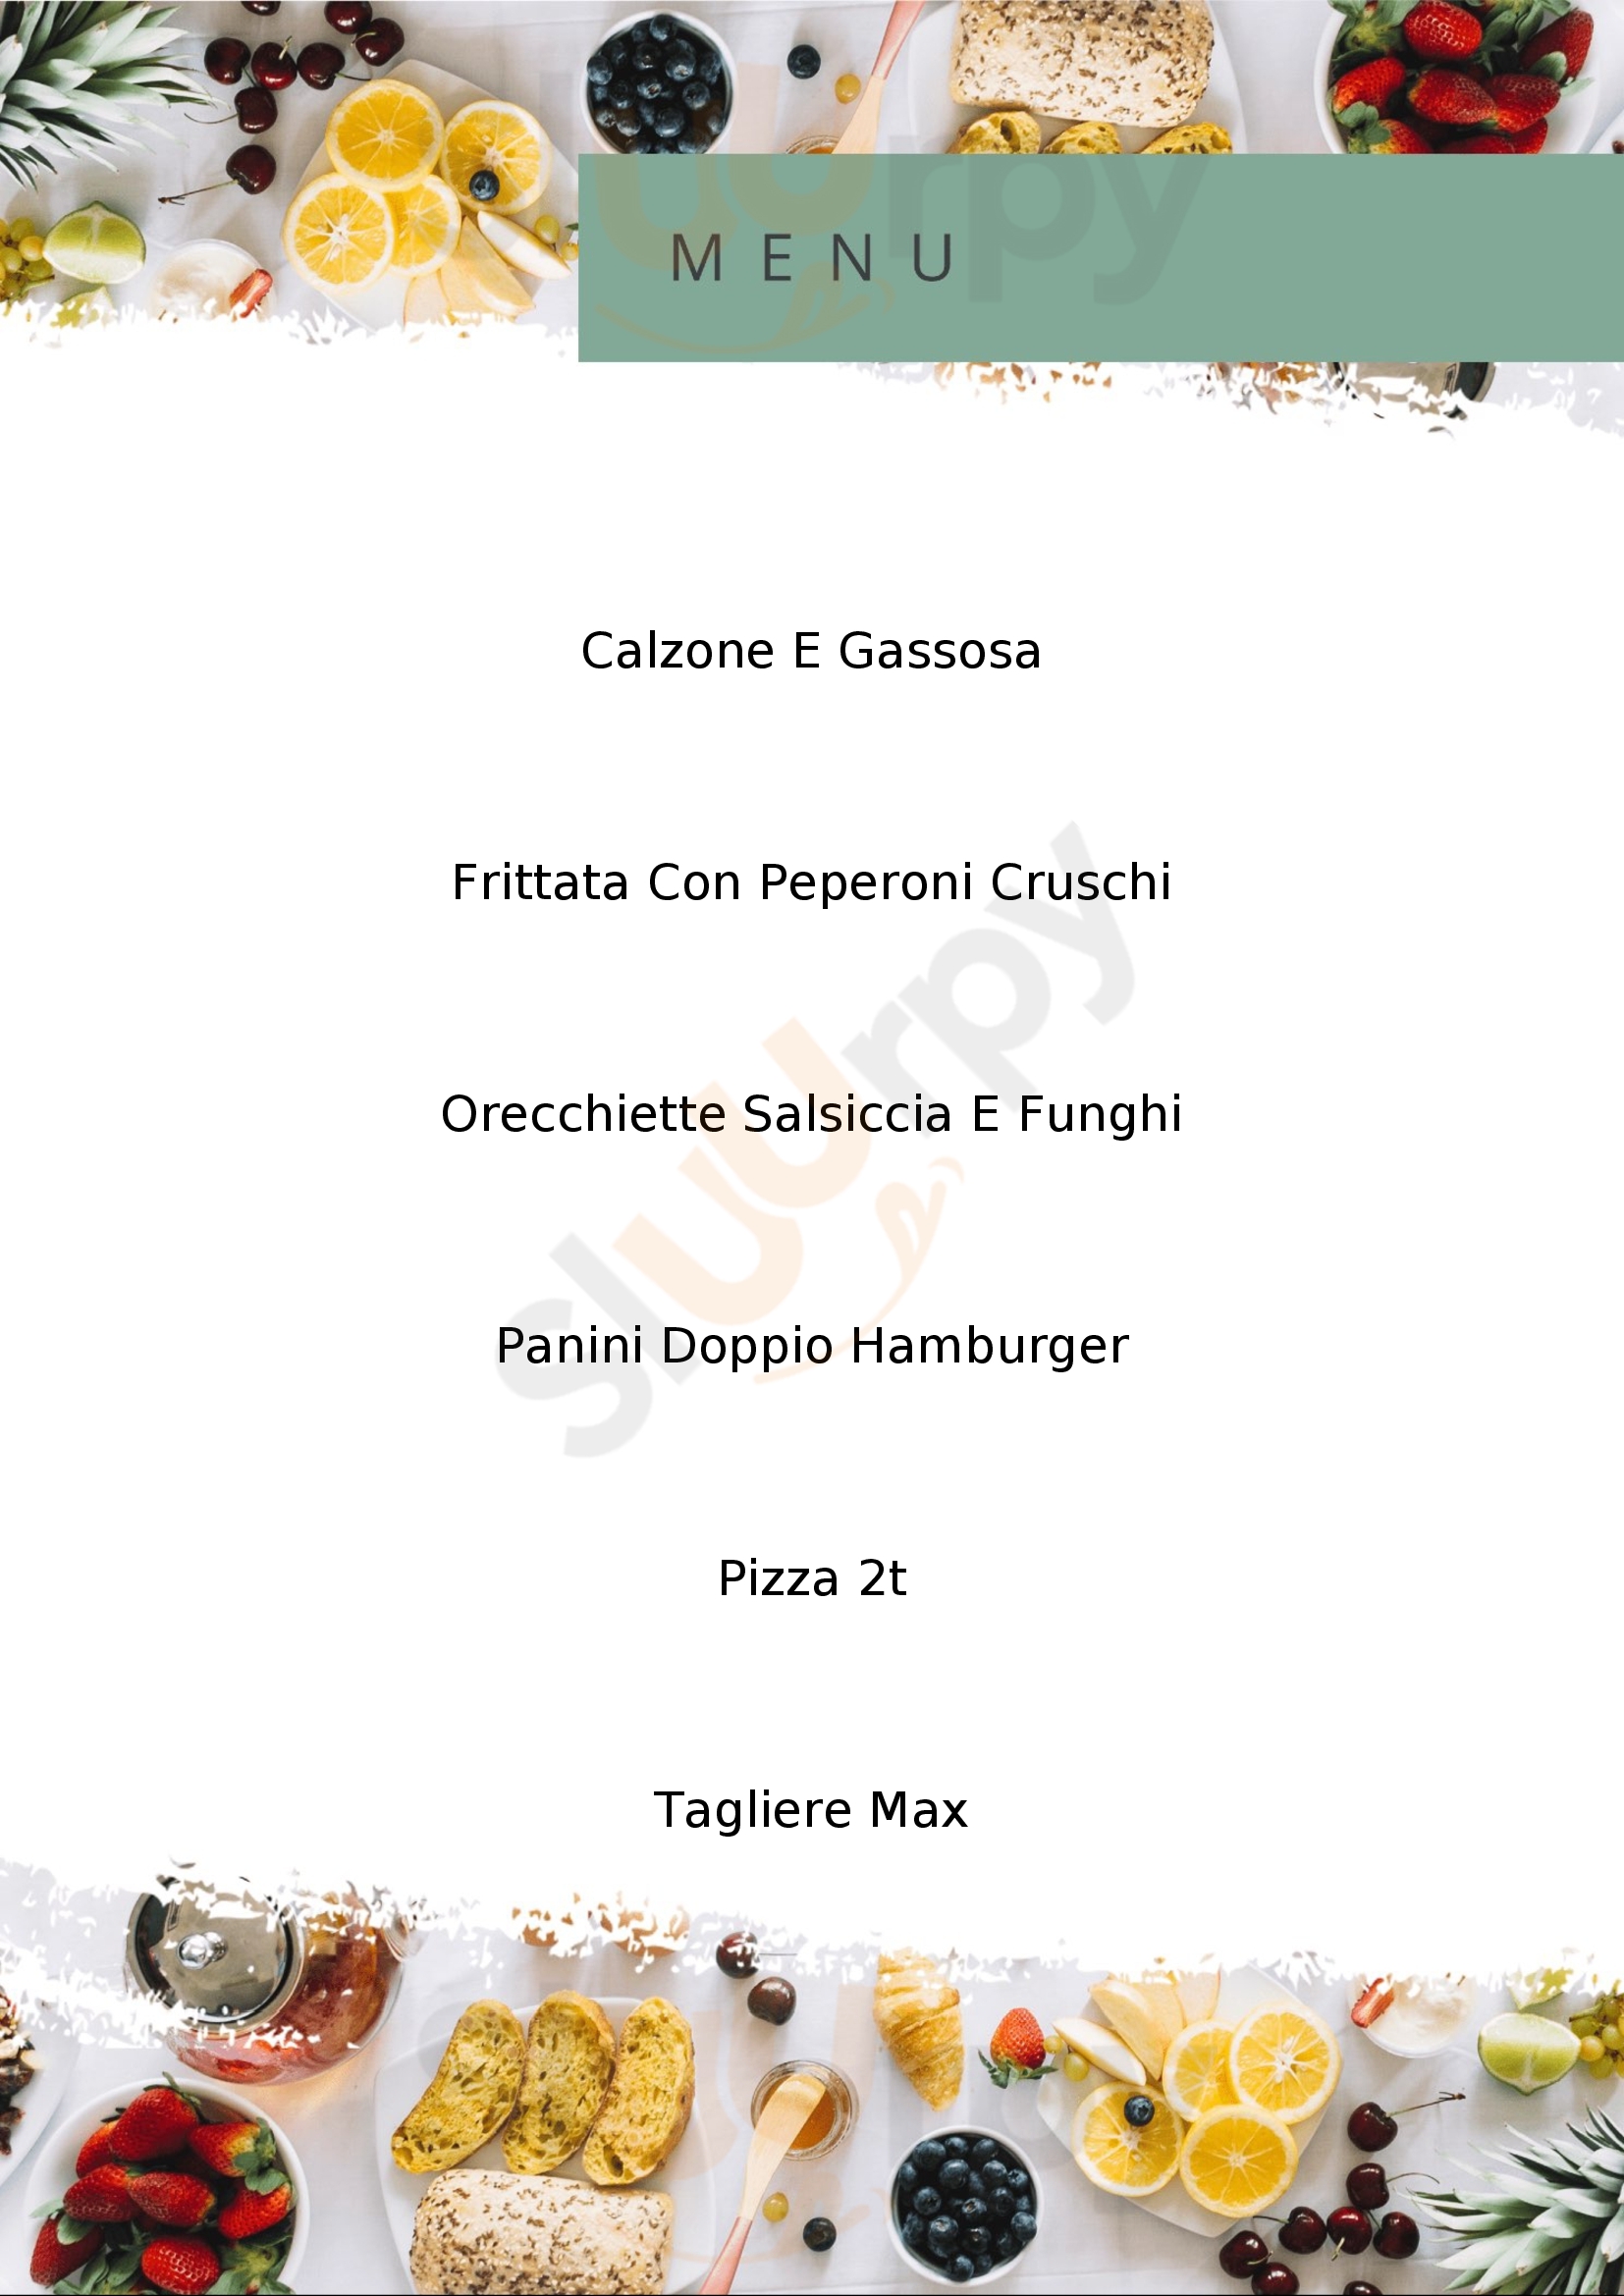 Pizzeria Rosticceria 2T Castelmezzano menù 1 pagina